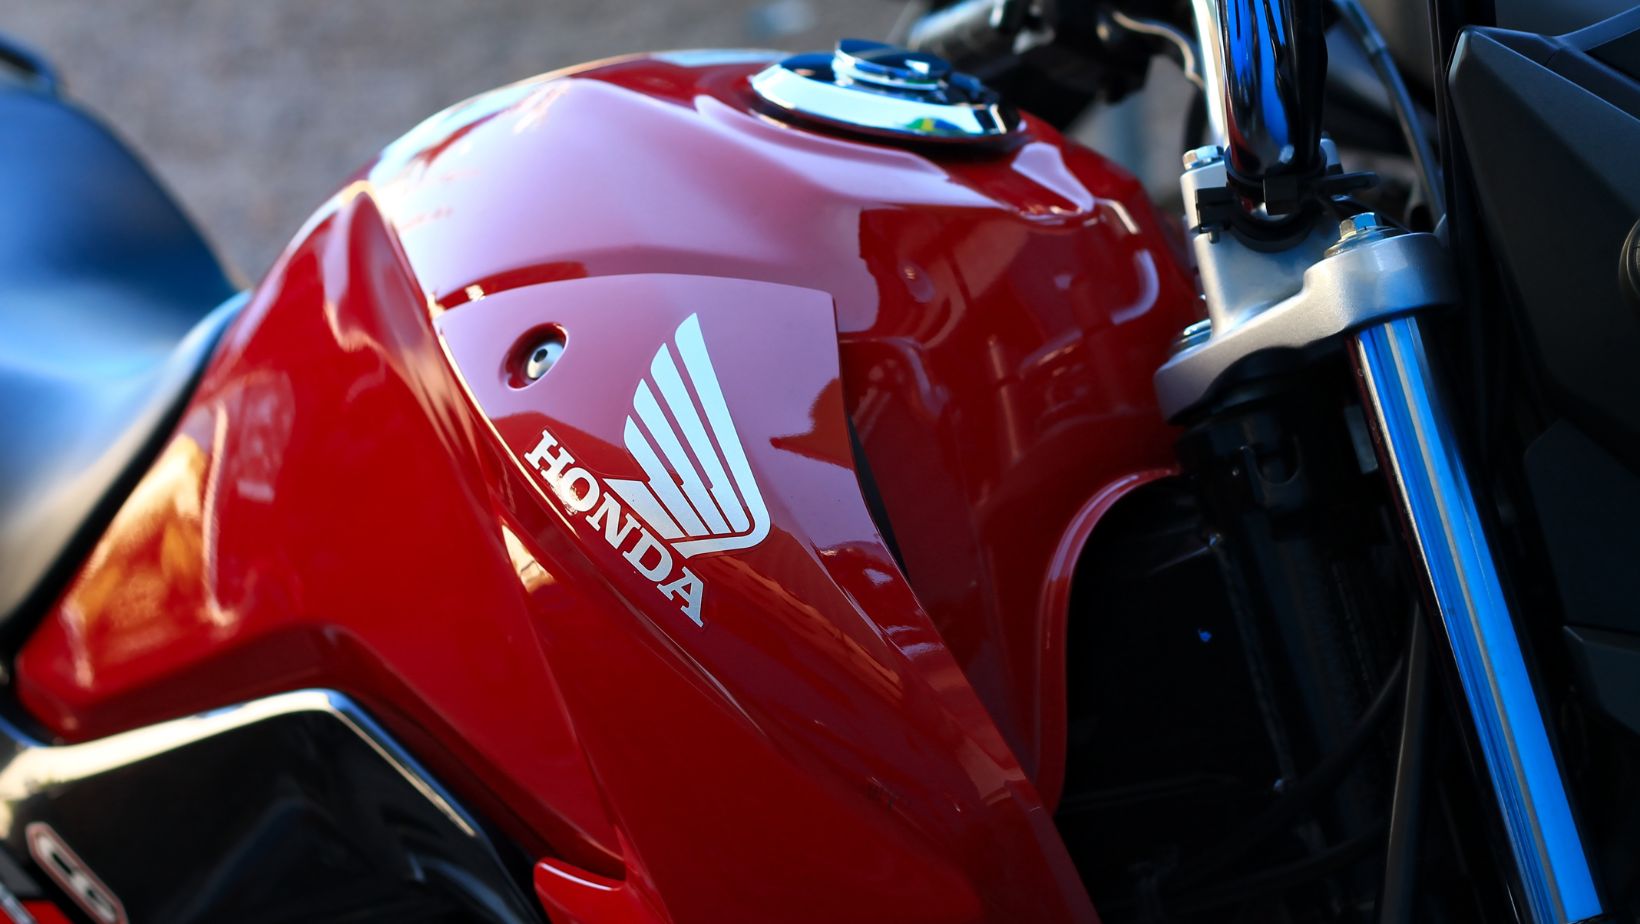 honda motorcycle logo